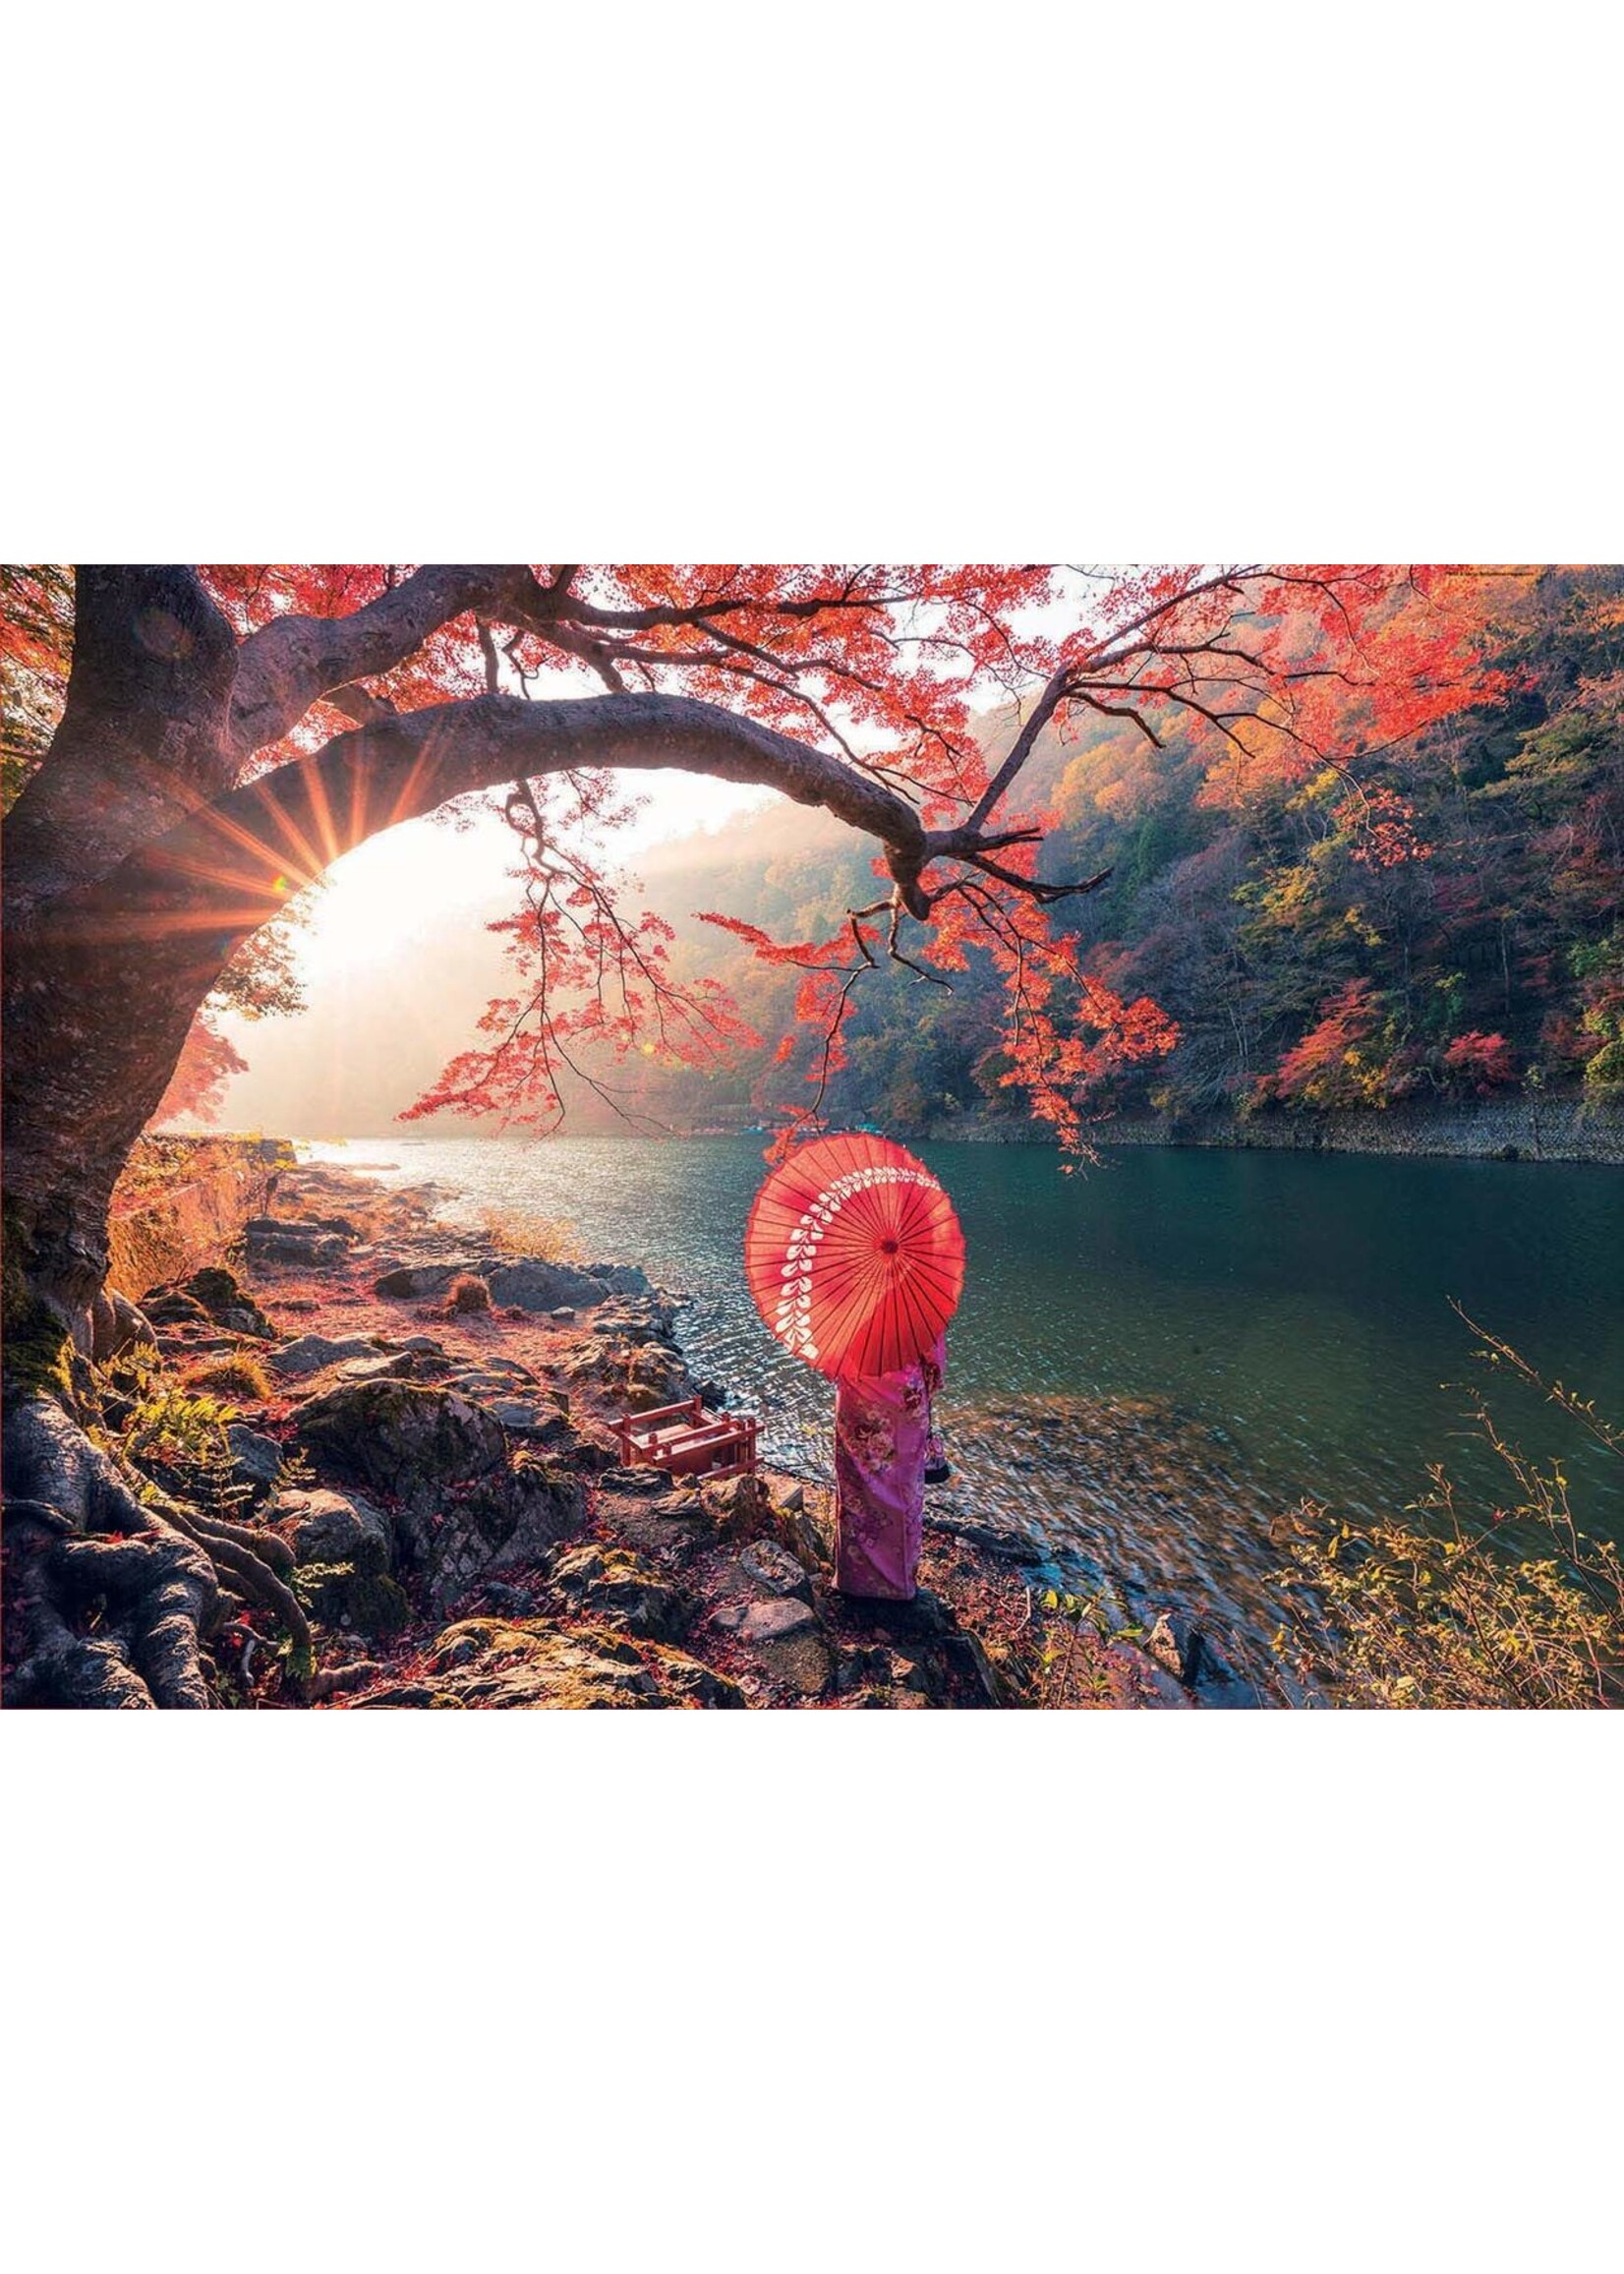 Educa "Sunrise in Katsura River, Japan" 1000 Piece Puzzle